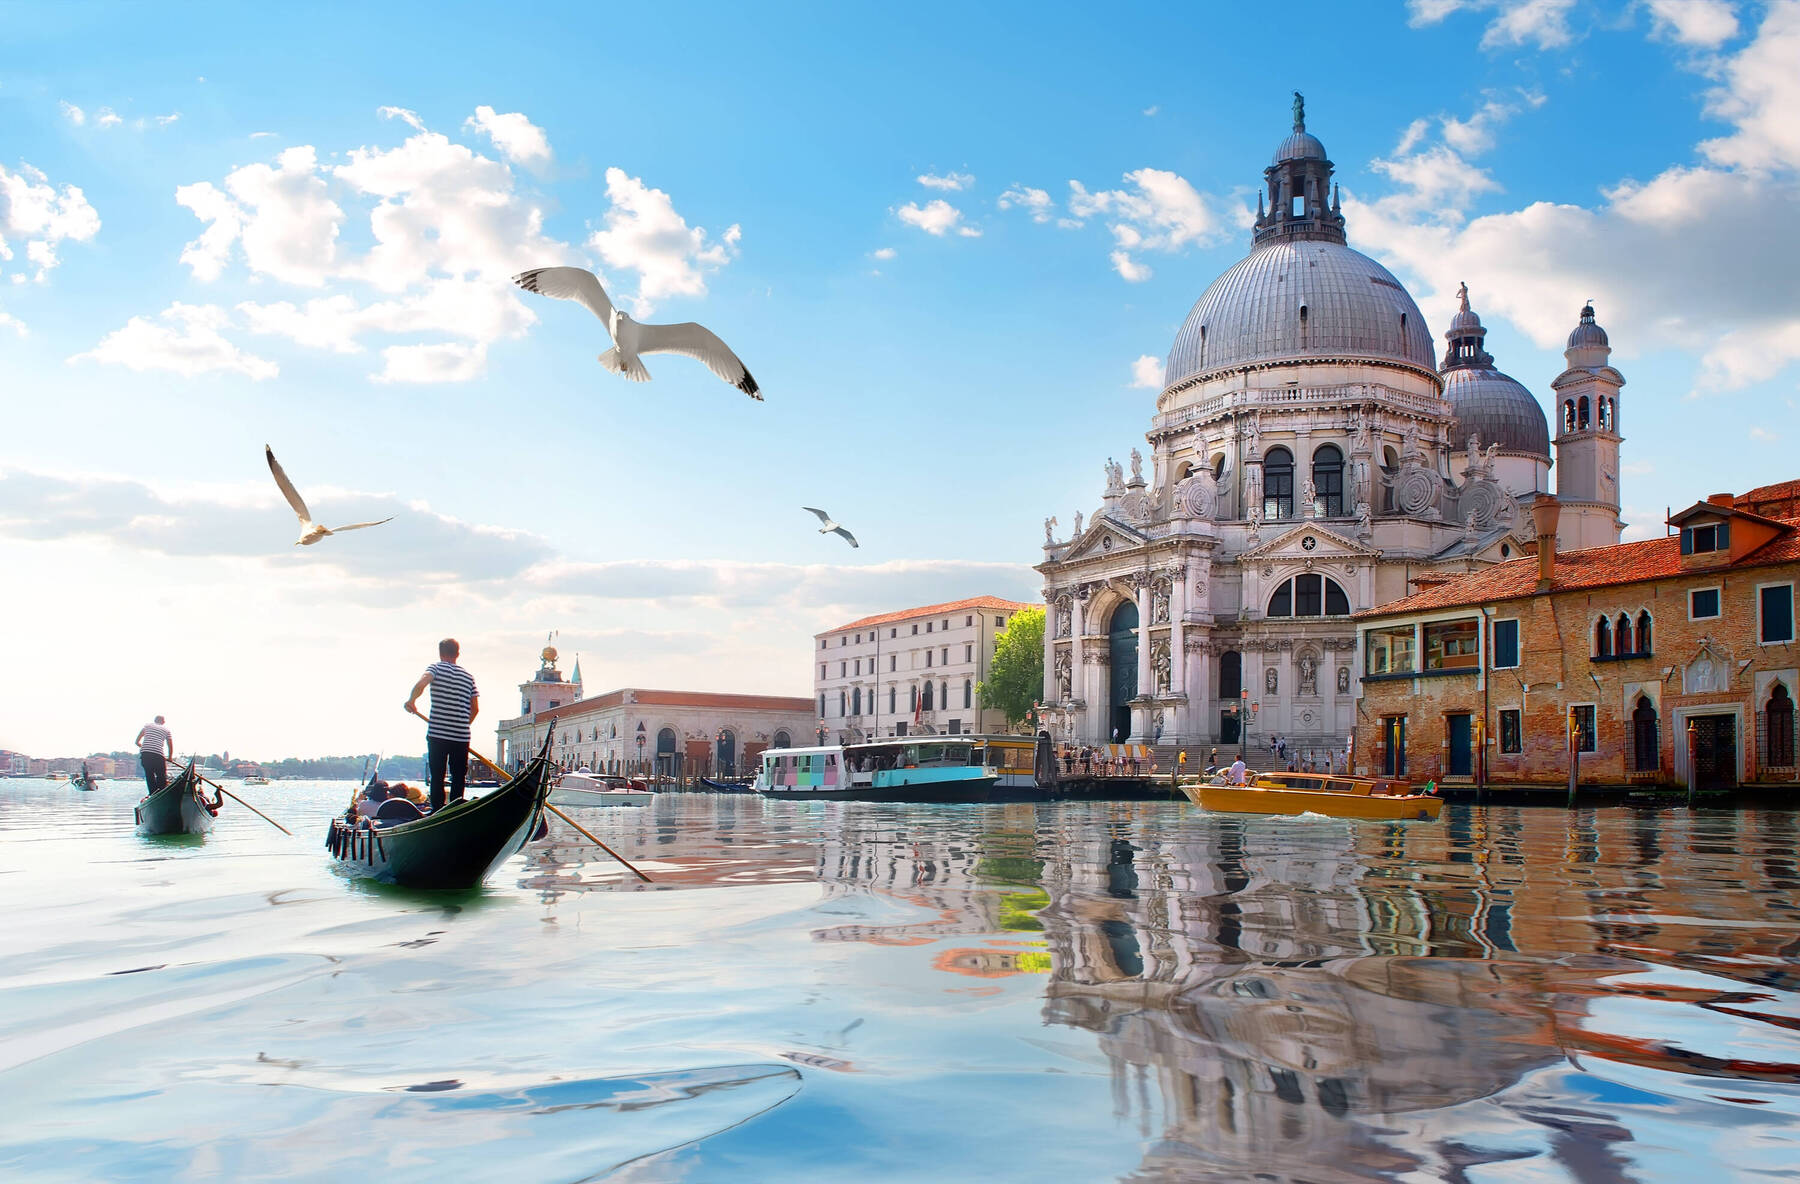 Venice's best kept secrets